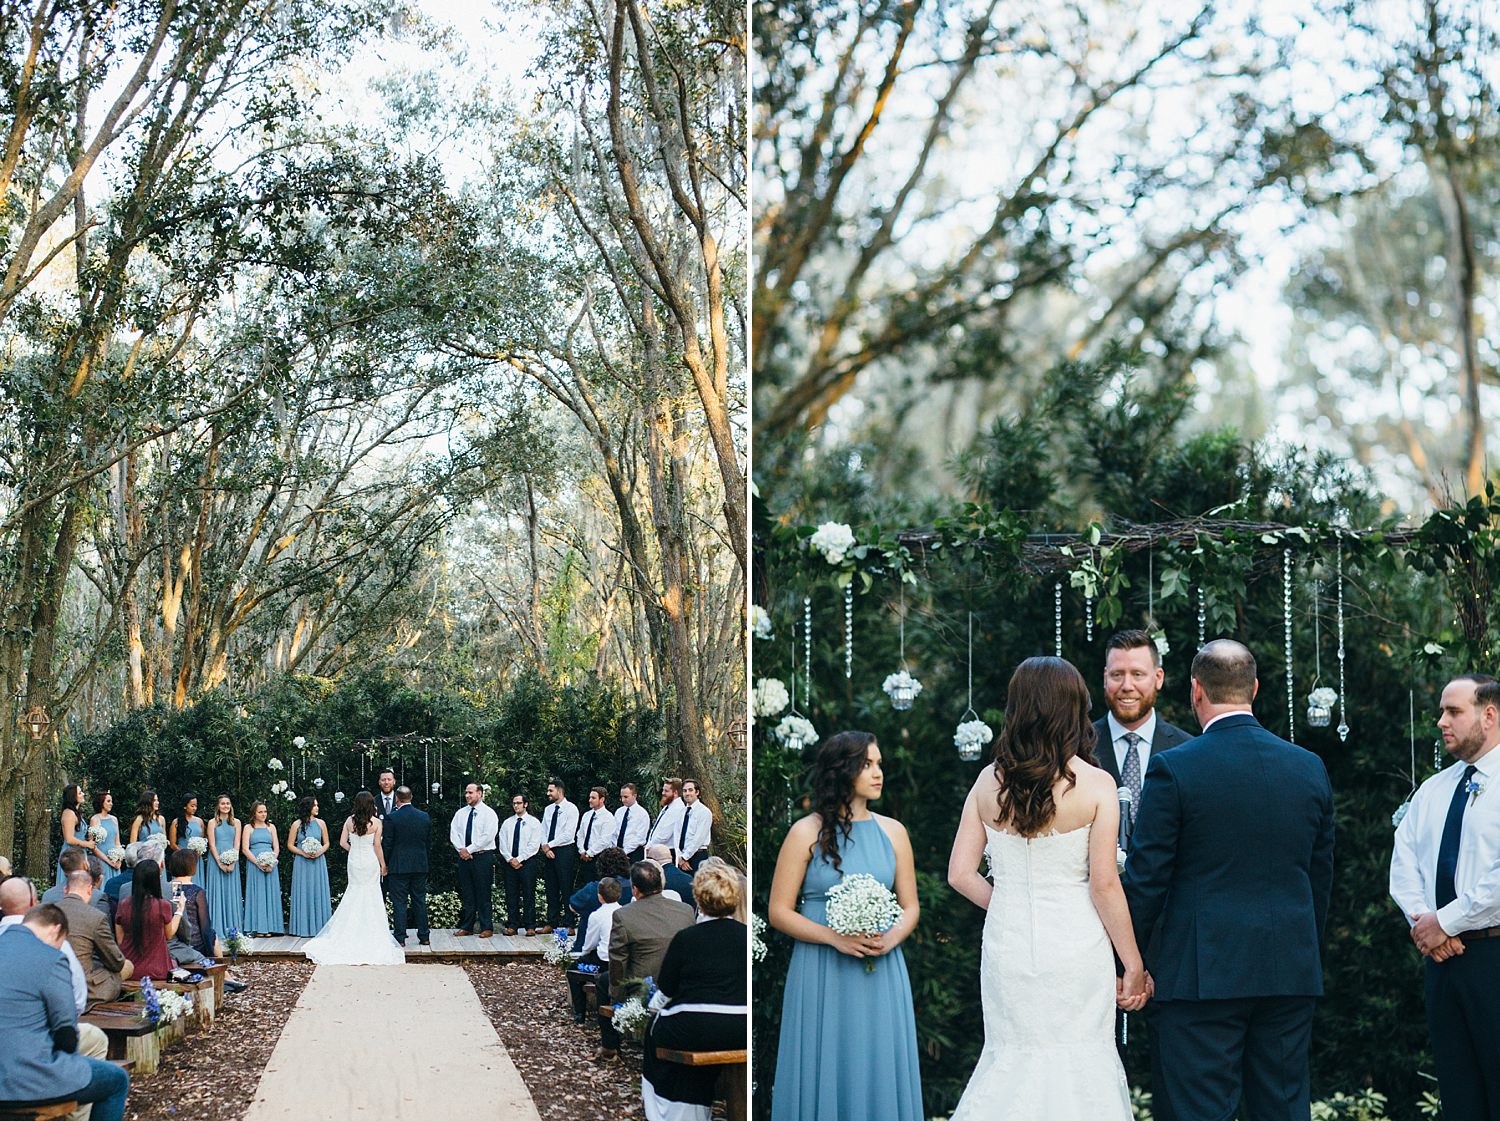 Gables Ceremony | Florida Rustic Barn Weddings | Plant City, Florida Wedding Photography | Benjamin Hewitt Photographer